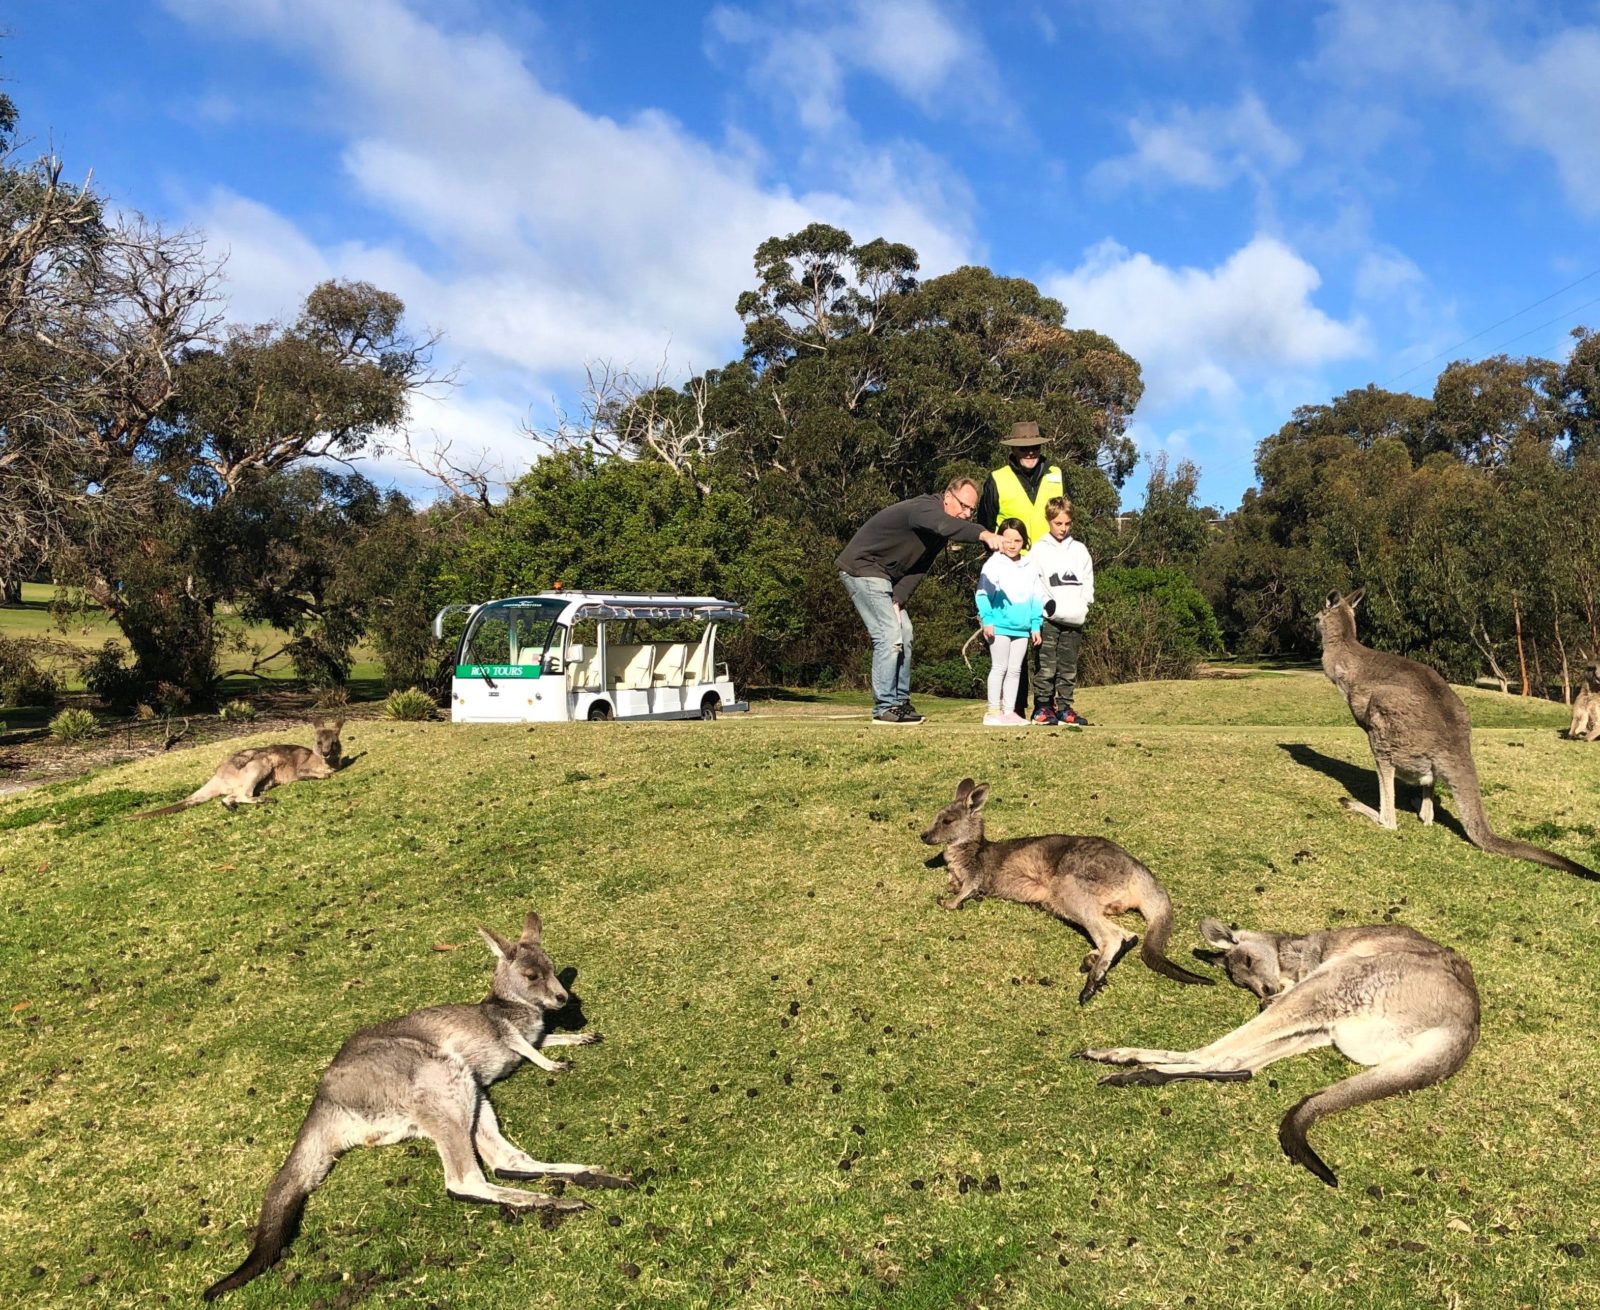 Tour guide, bus and kangaroos